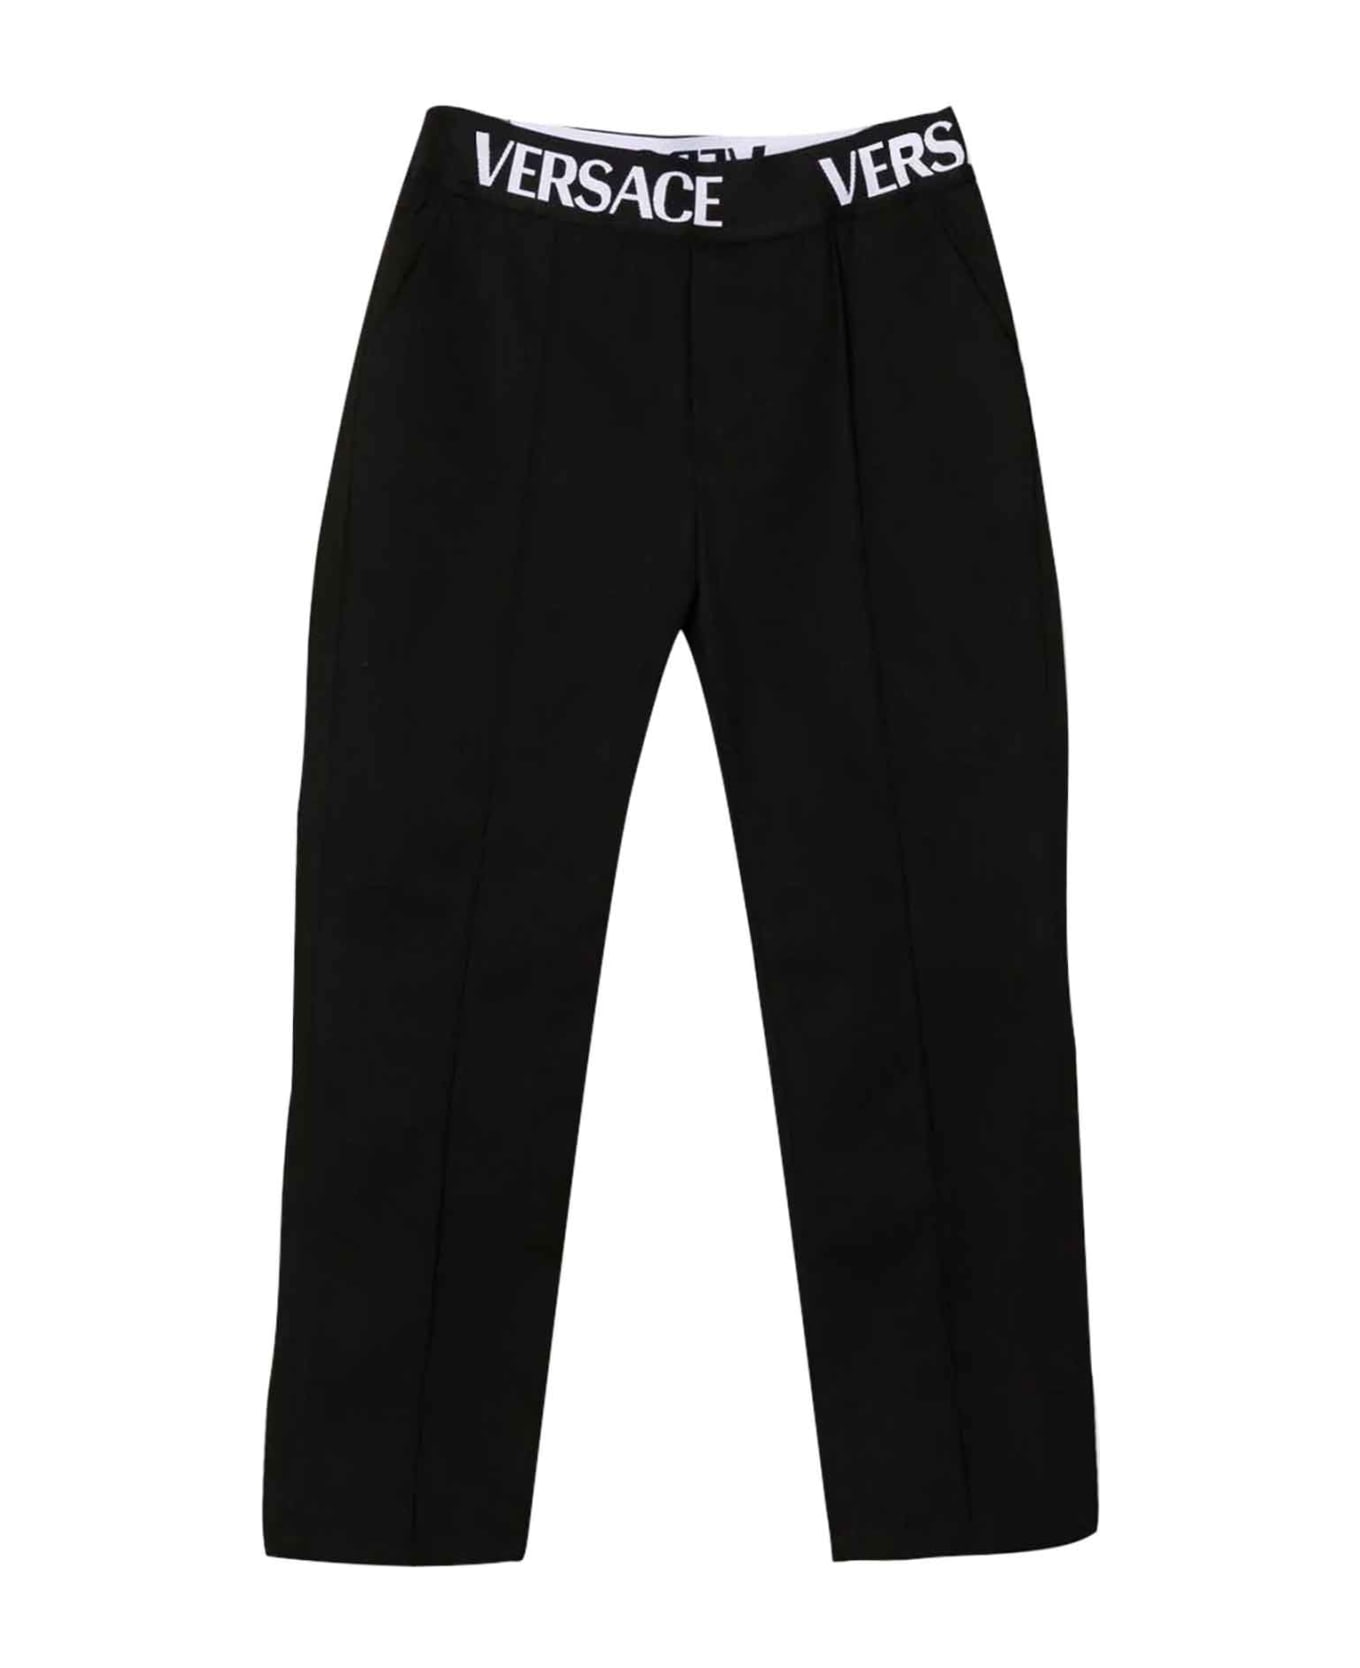 Versace Black Trousers Unisex Kids - Nero